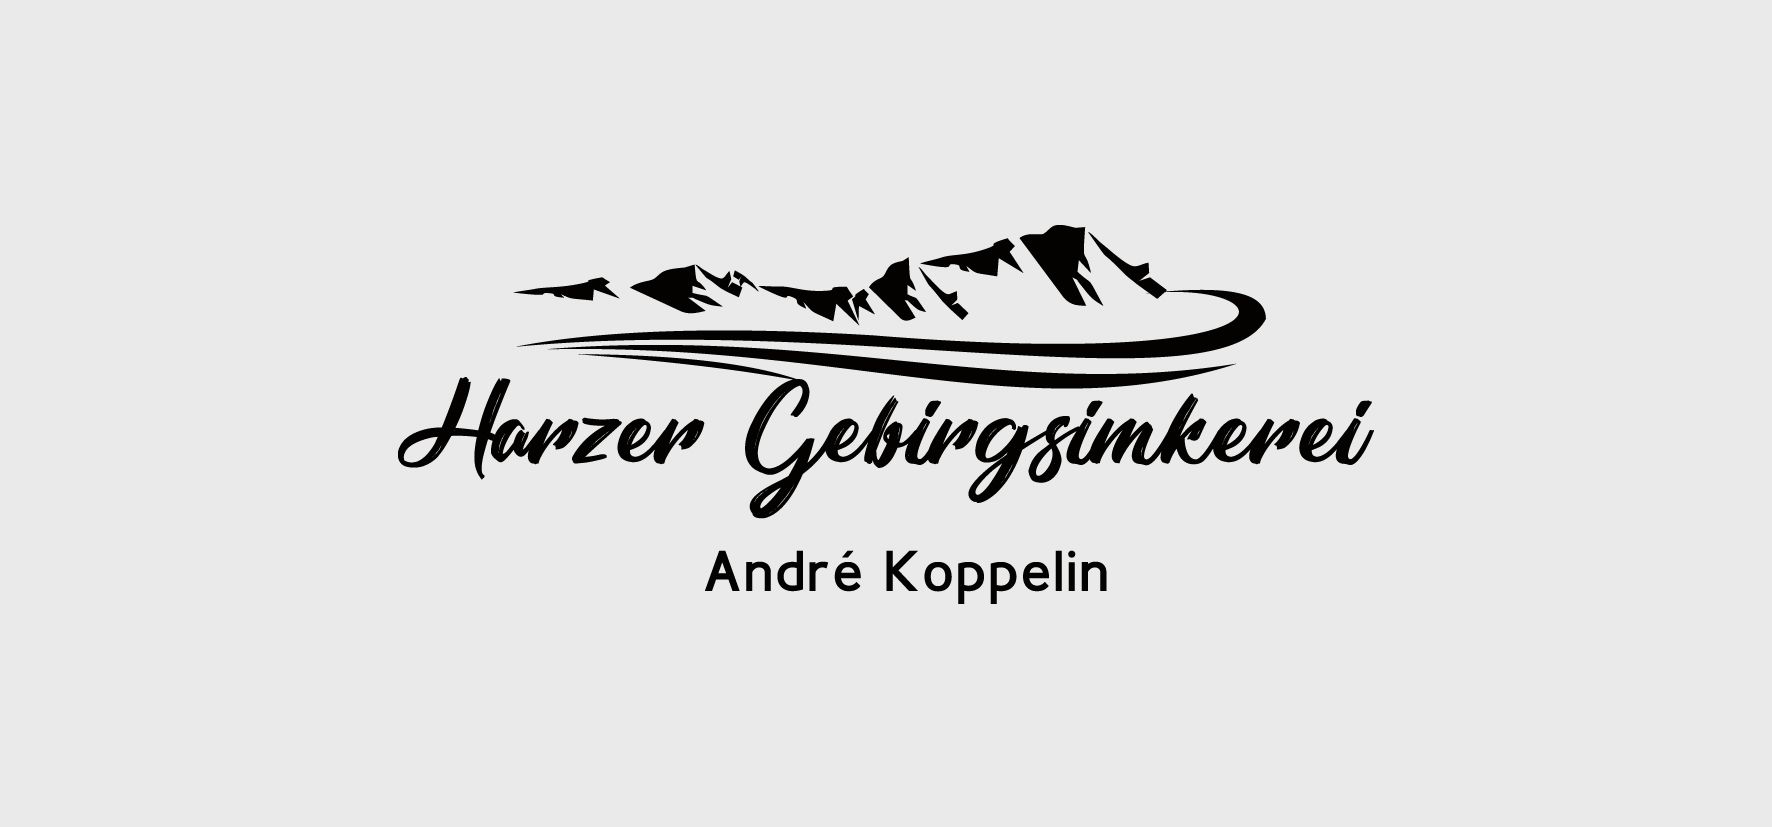 Harzer Gebirgsimkerei André Koppelin